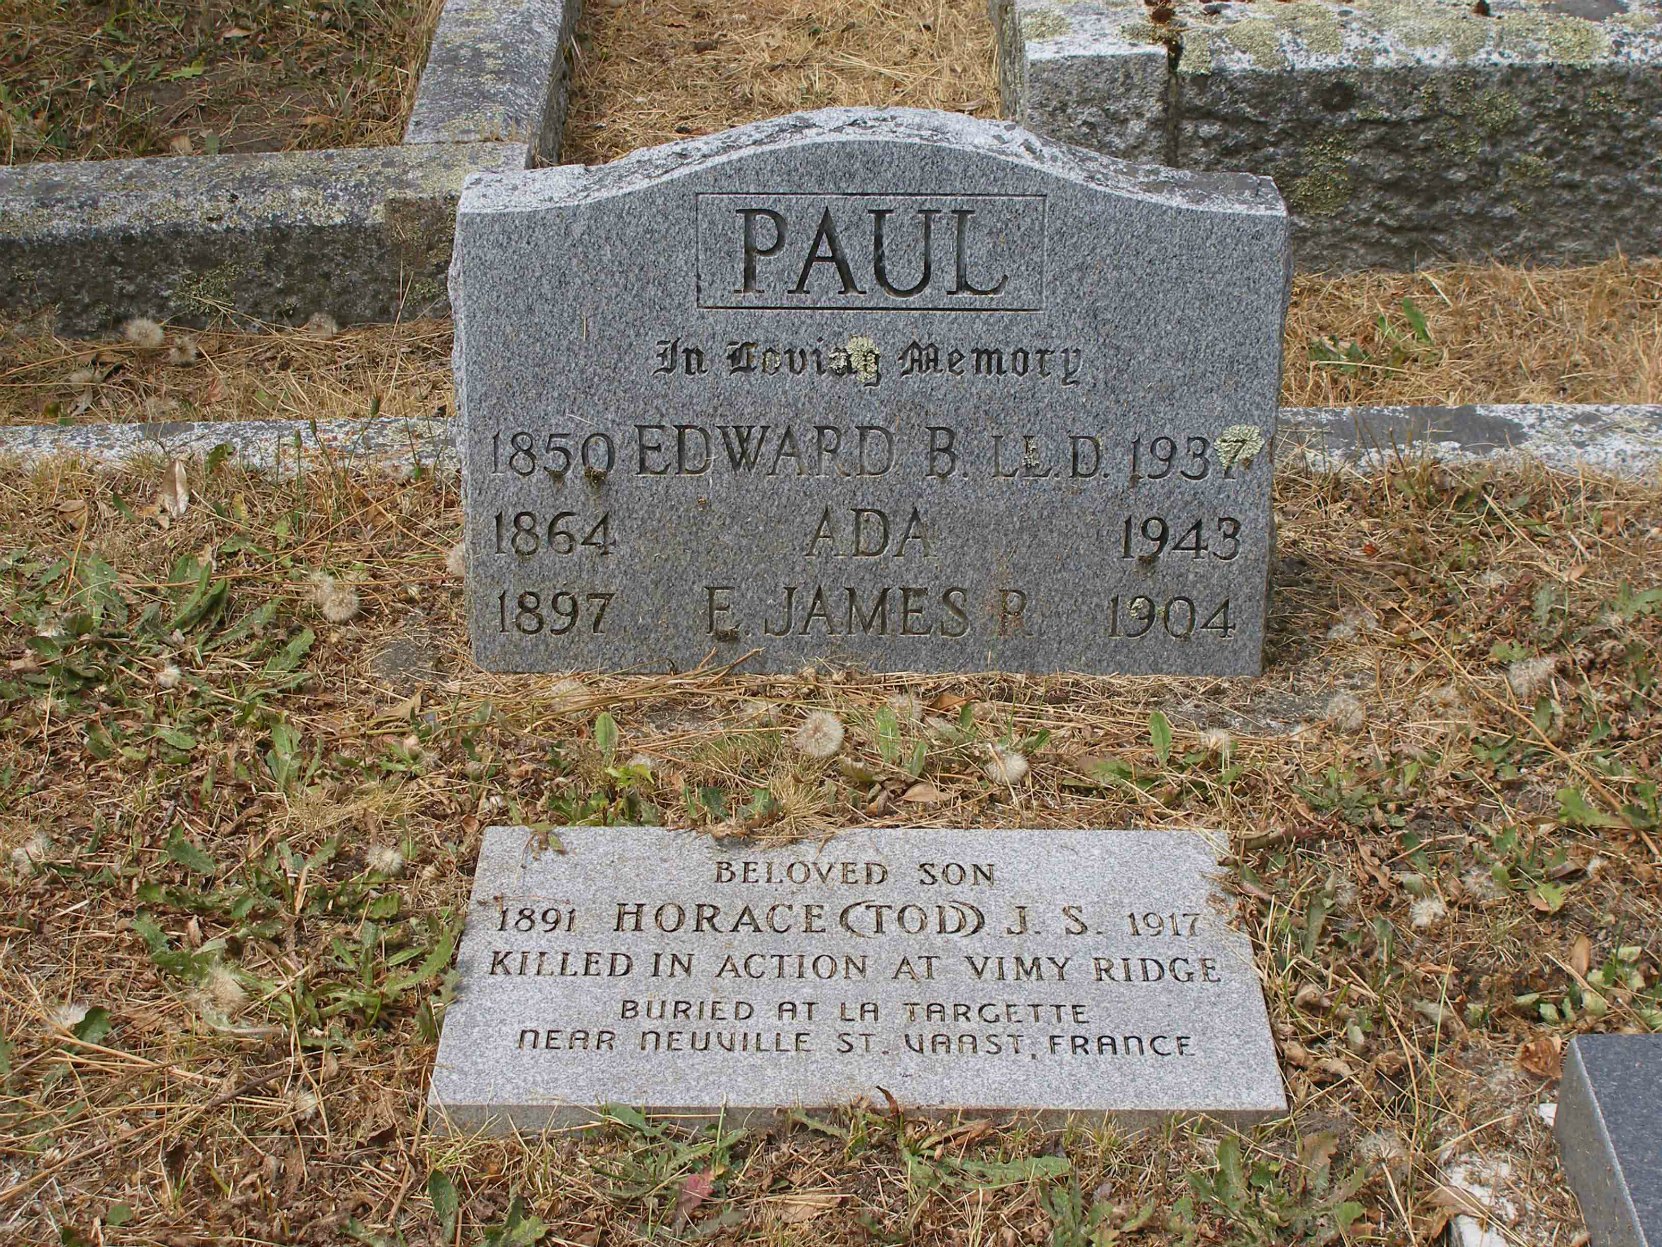 Edward Burness Paul headstone, Ross Bay Cemetery, Victoria, B.C,